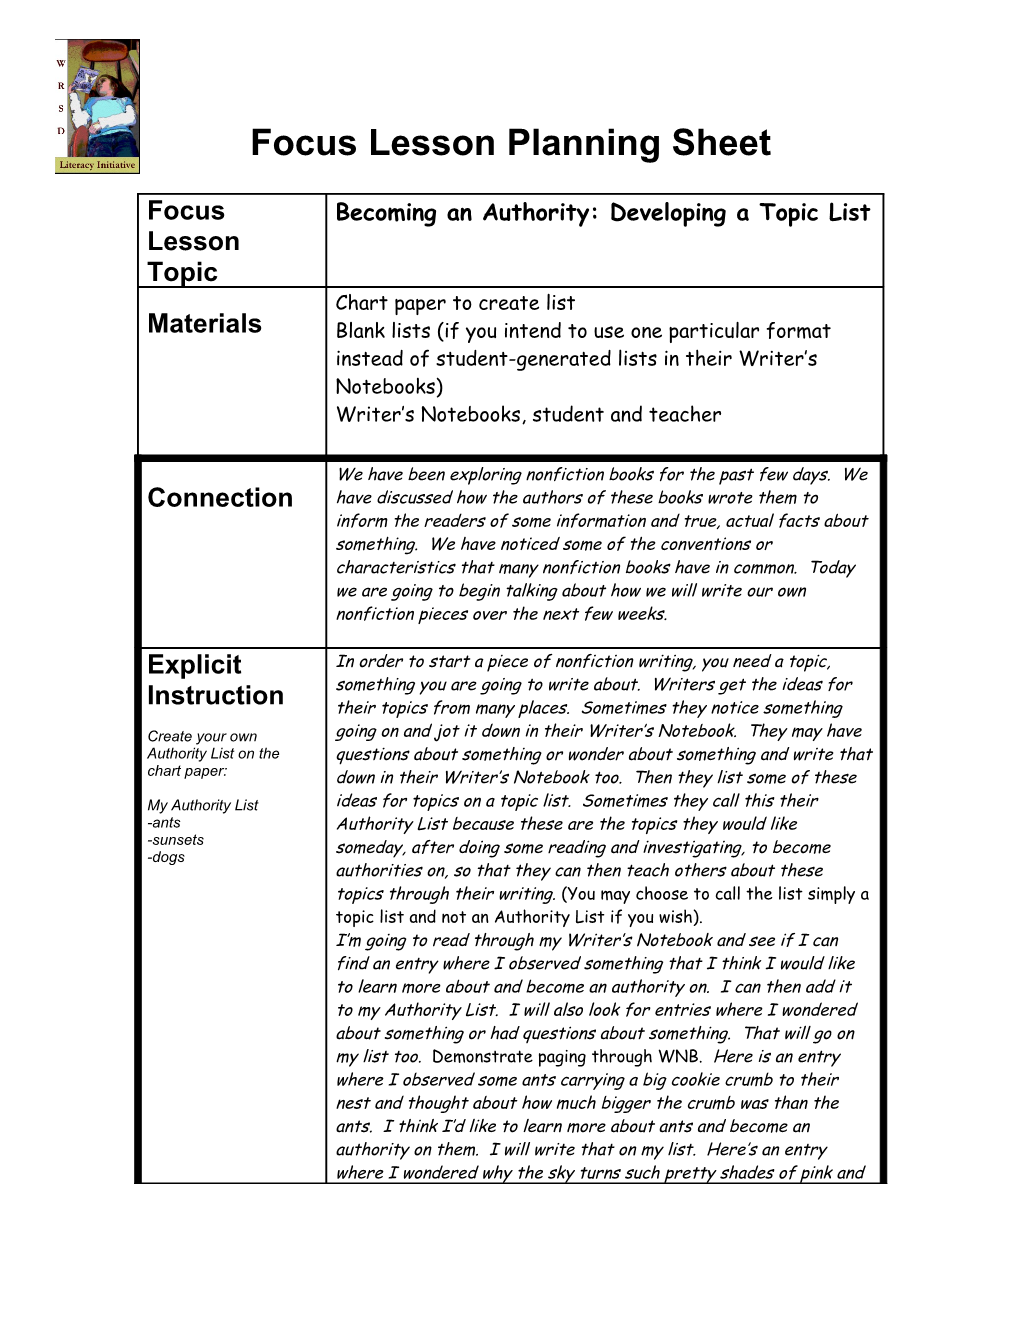 Focus Lesson Planning Sheet s8